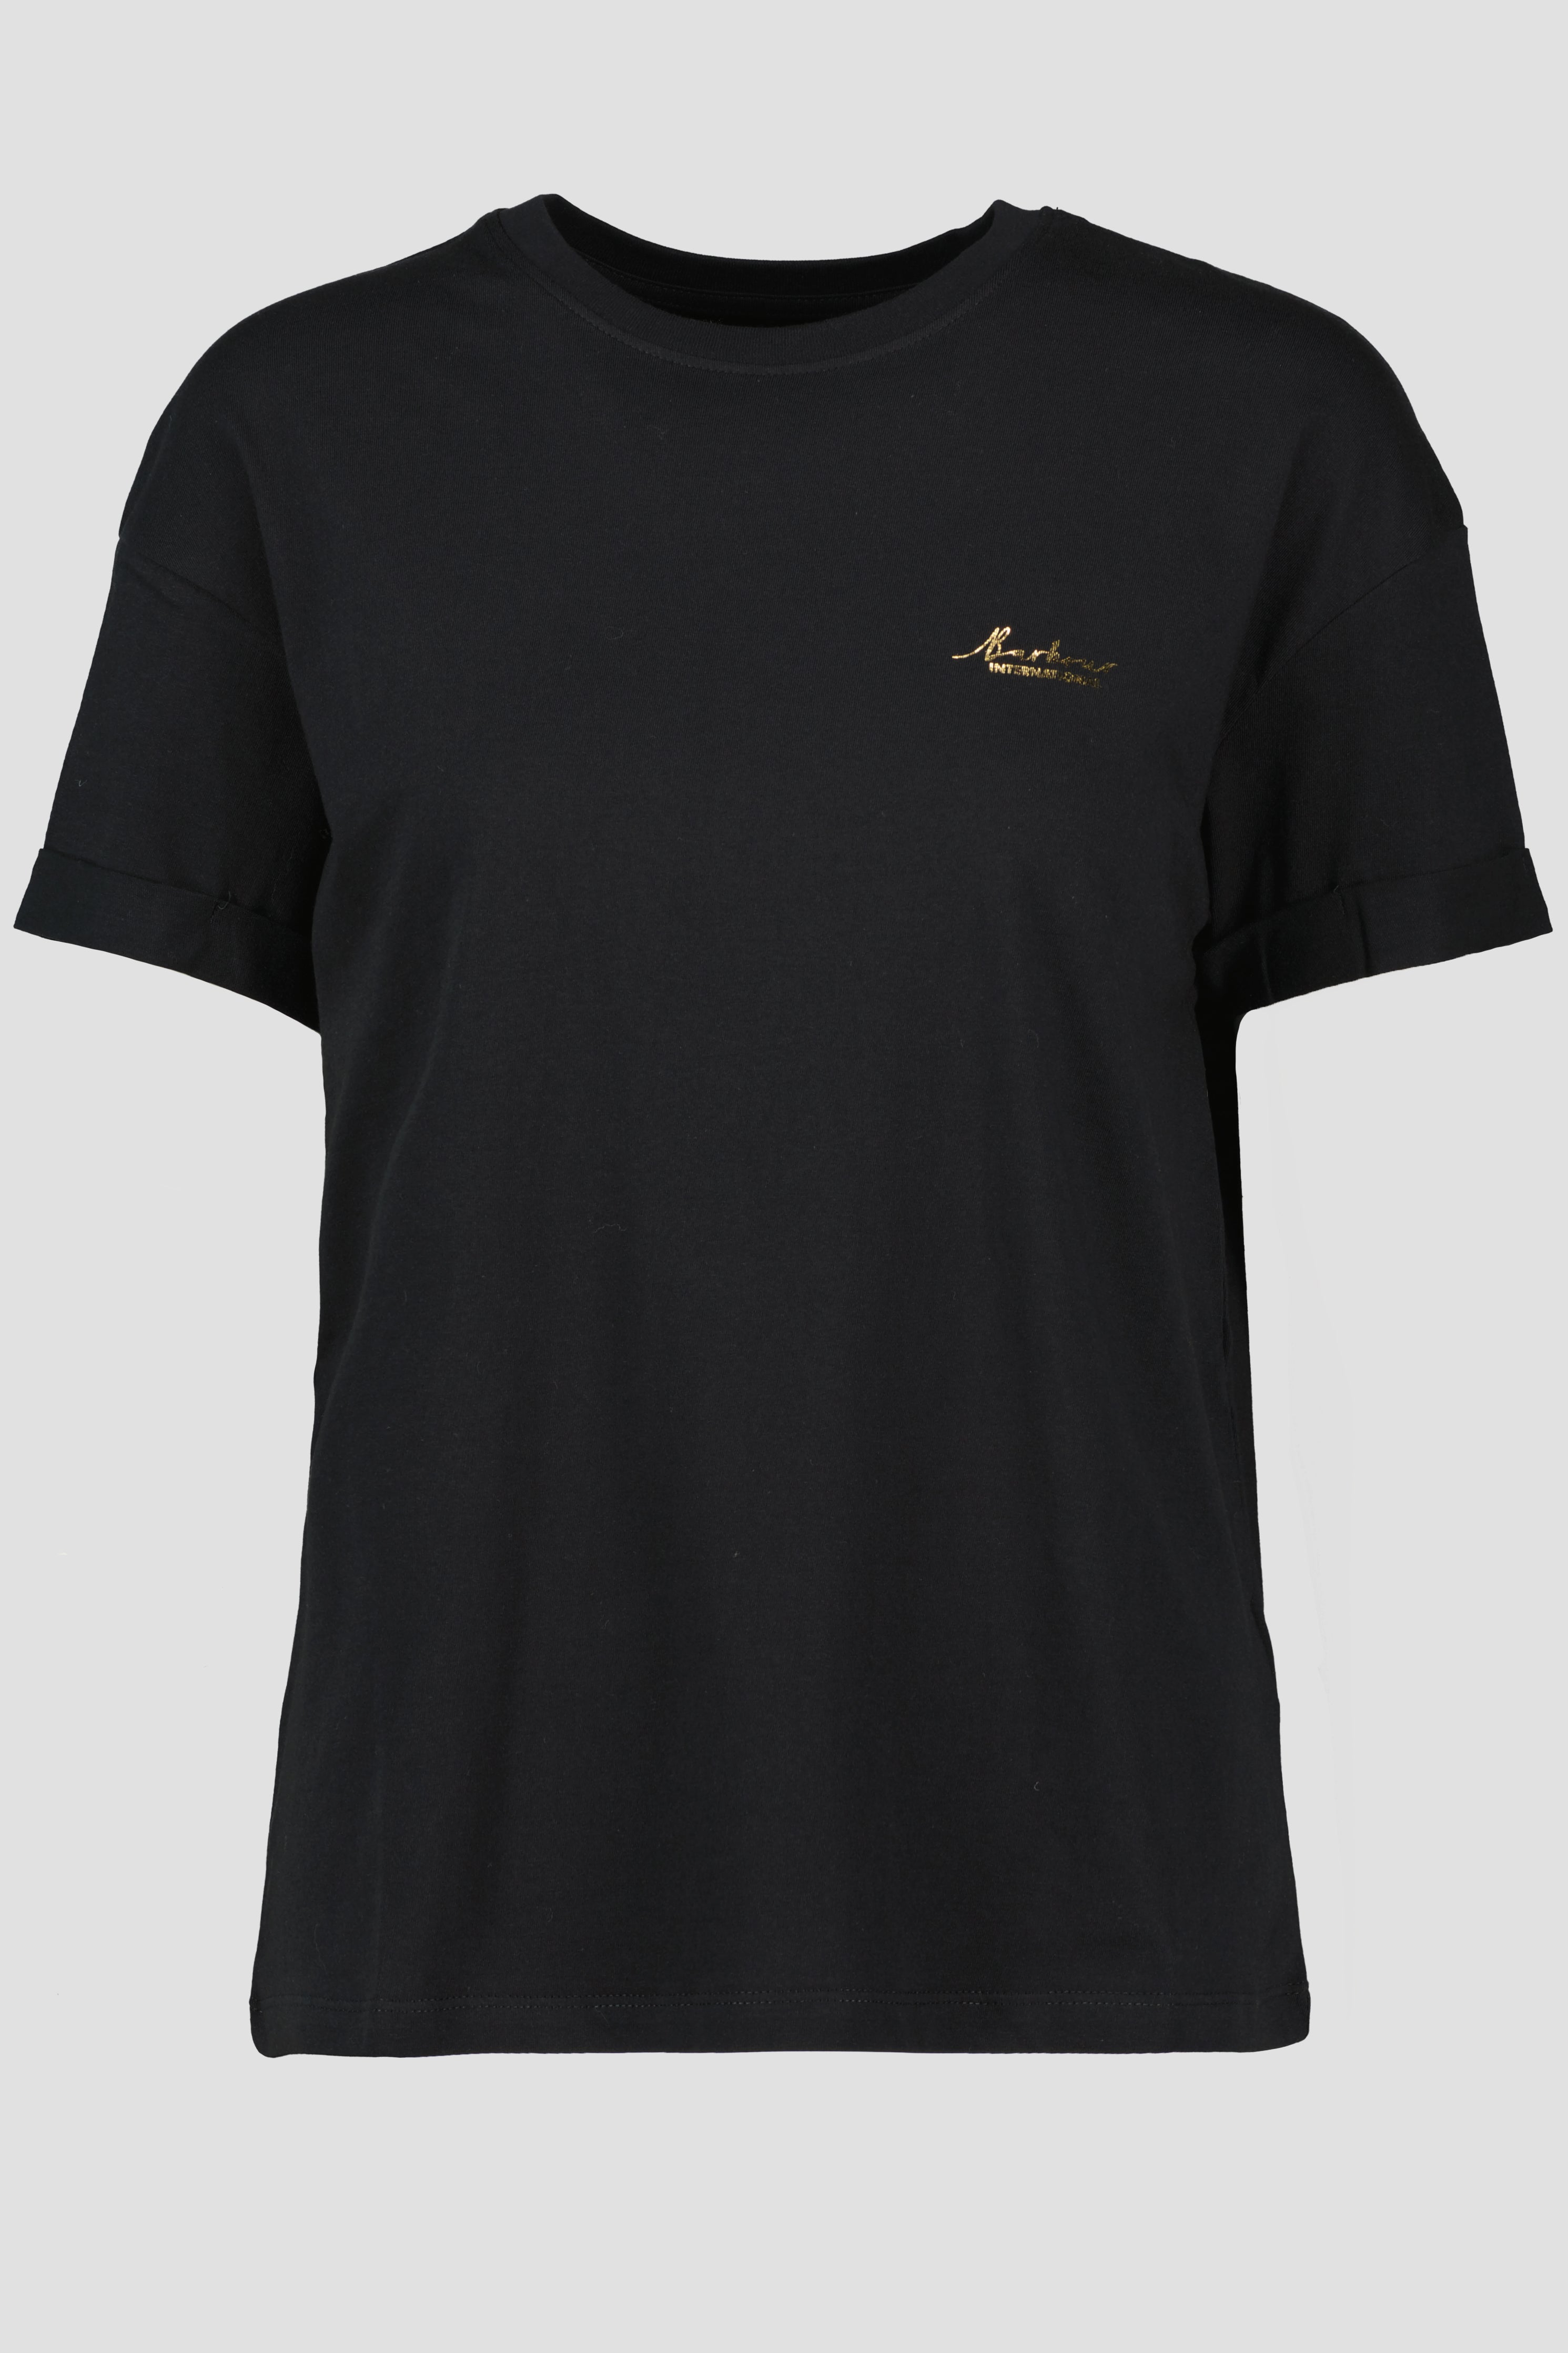 Women's Barbour Black Alonso T-Shirt